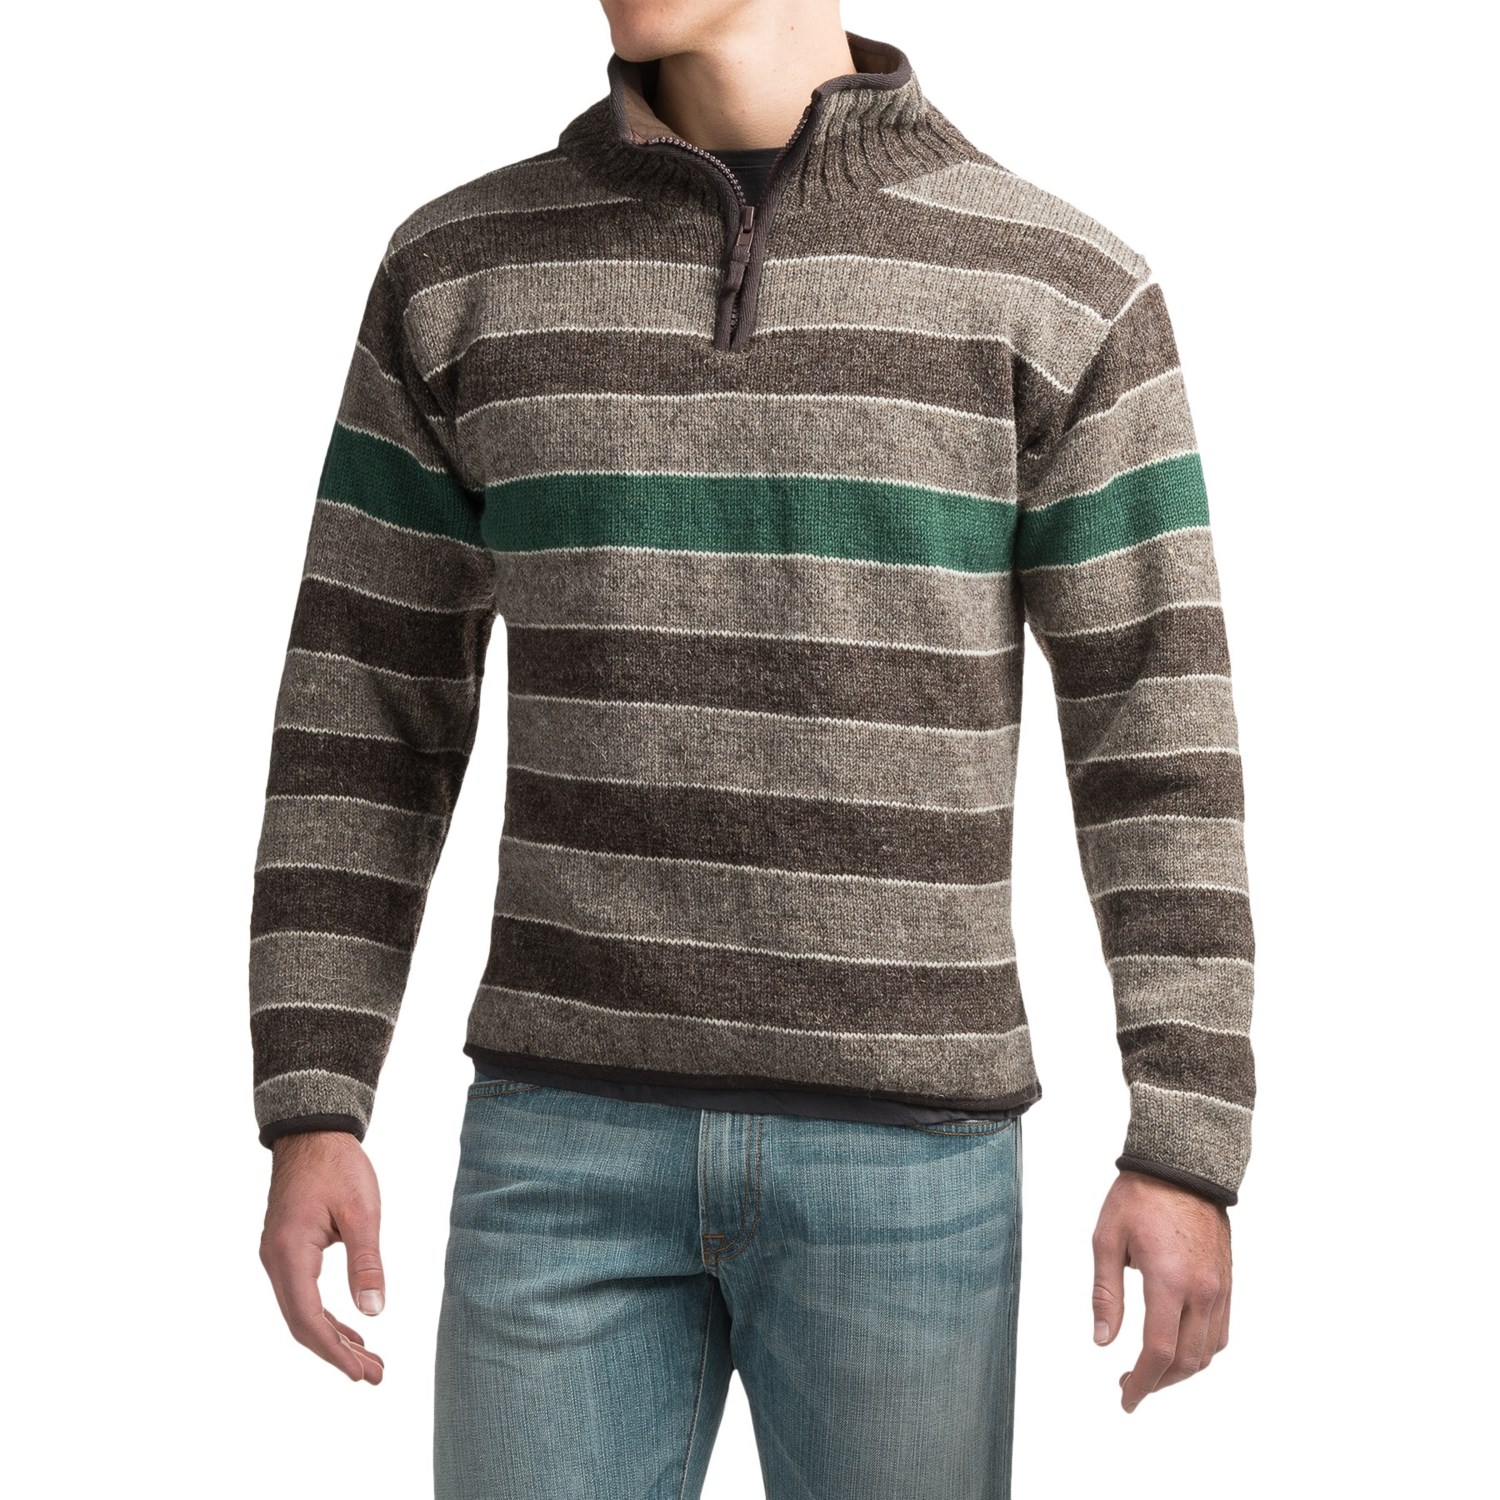 Laundromat Cambridge Sweater (For Men) - Save 53%